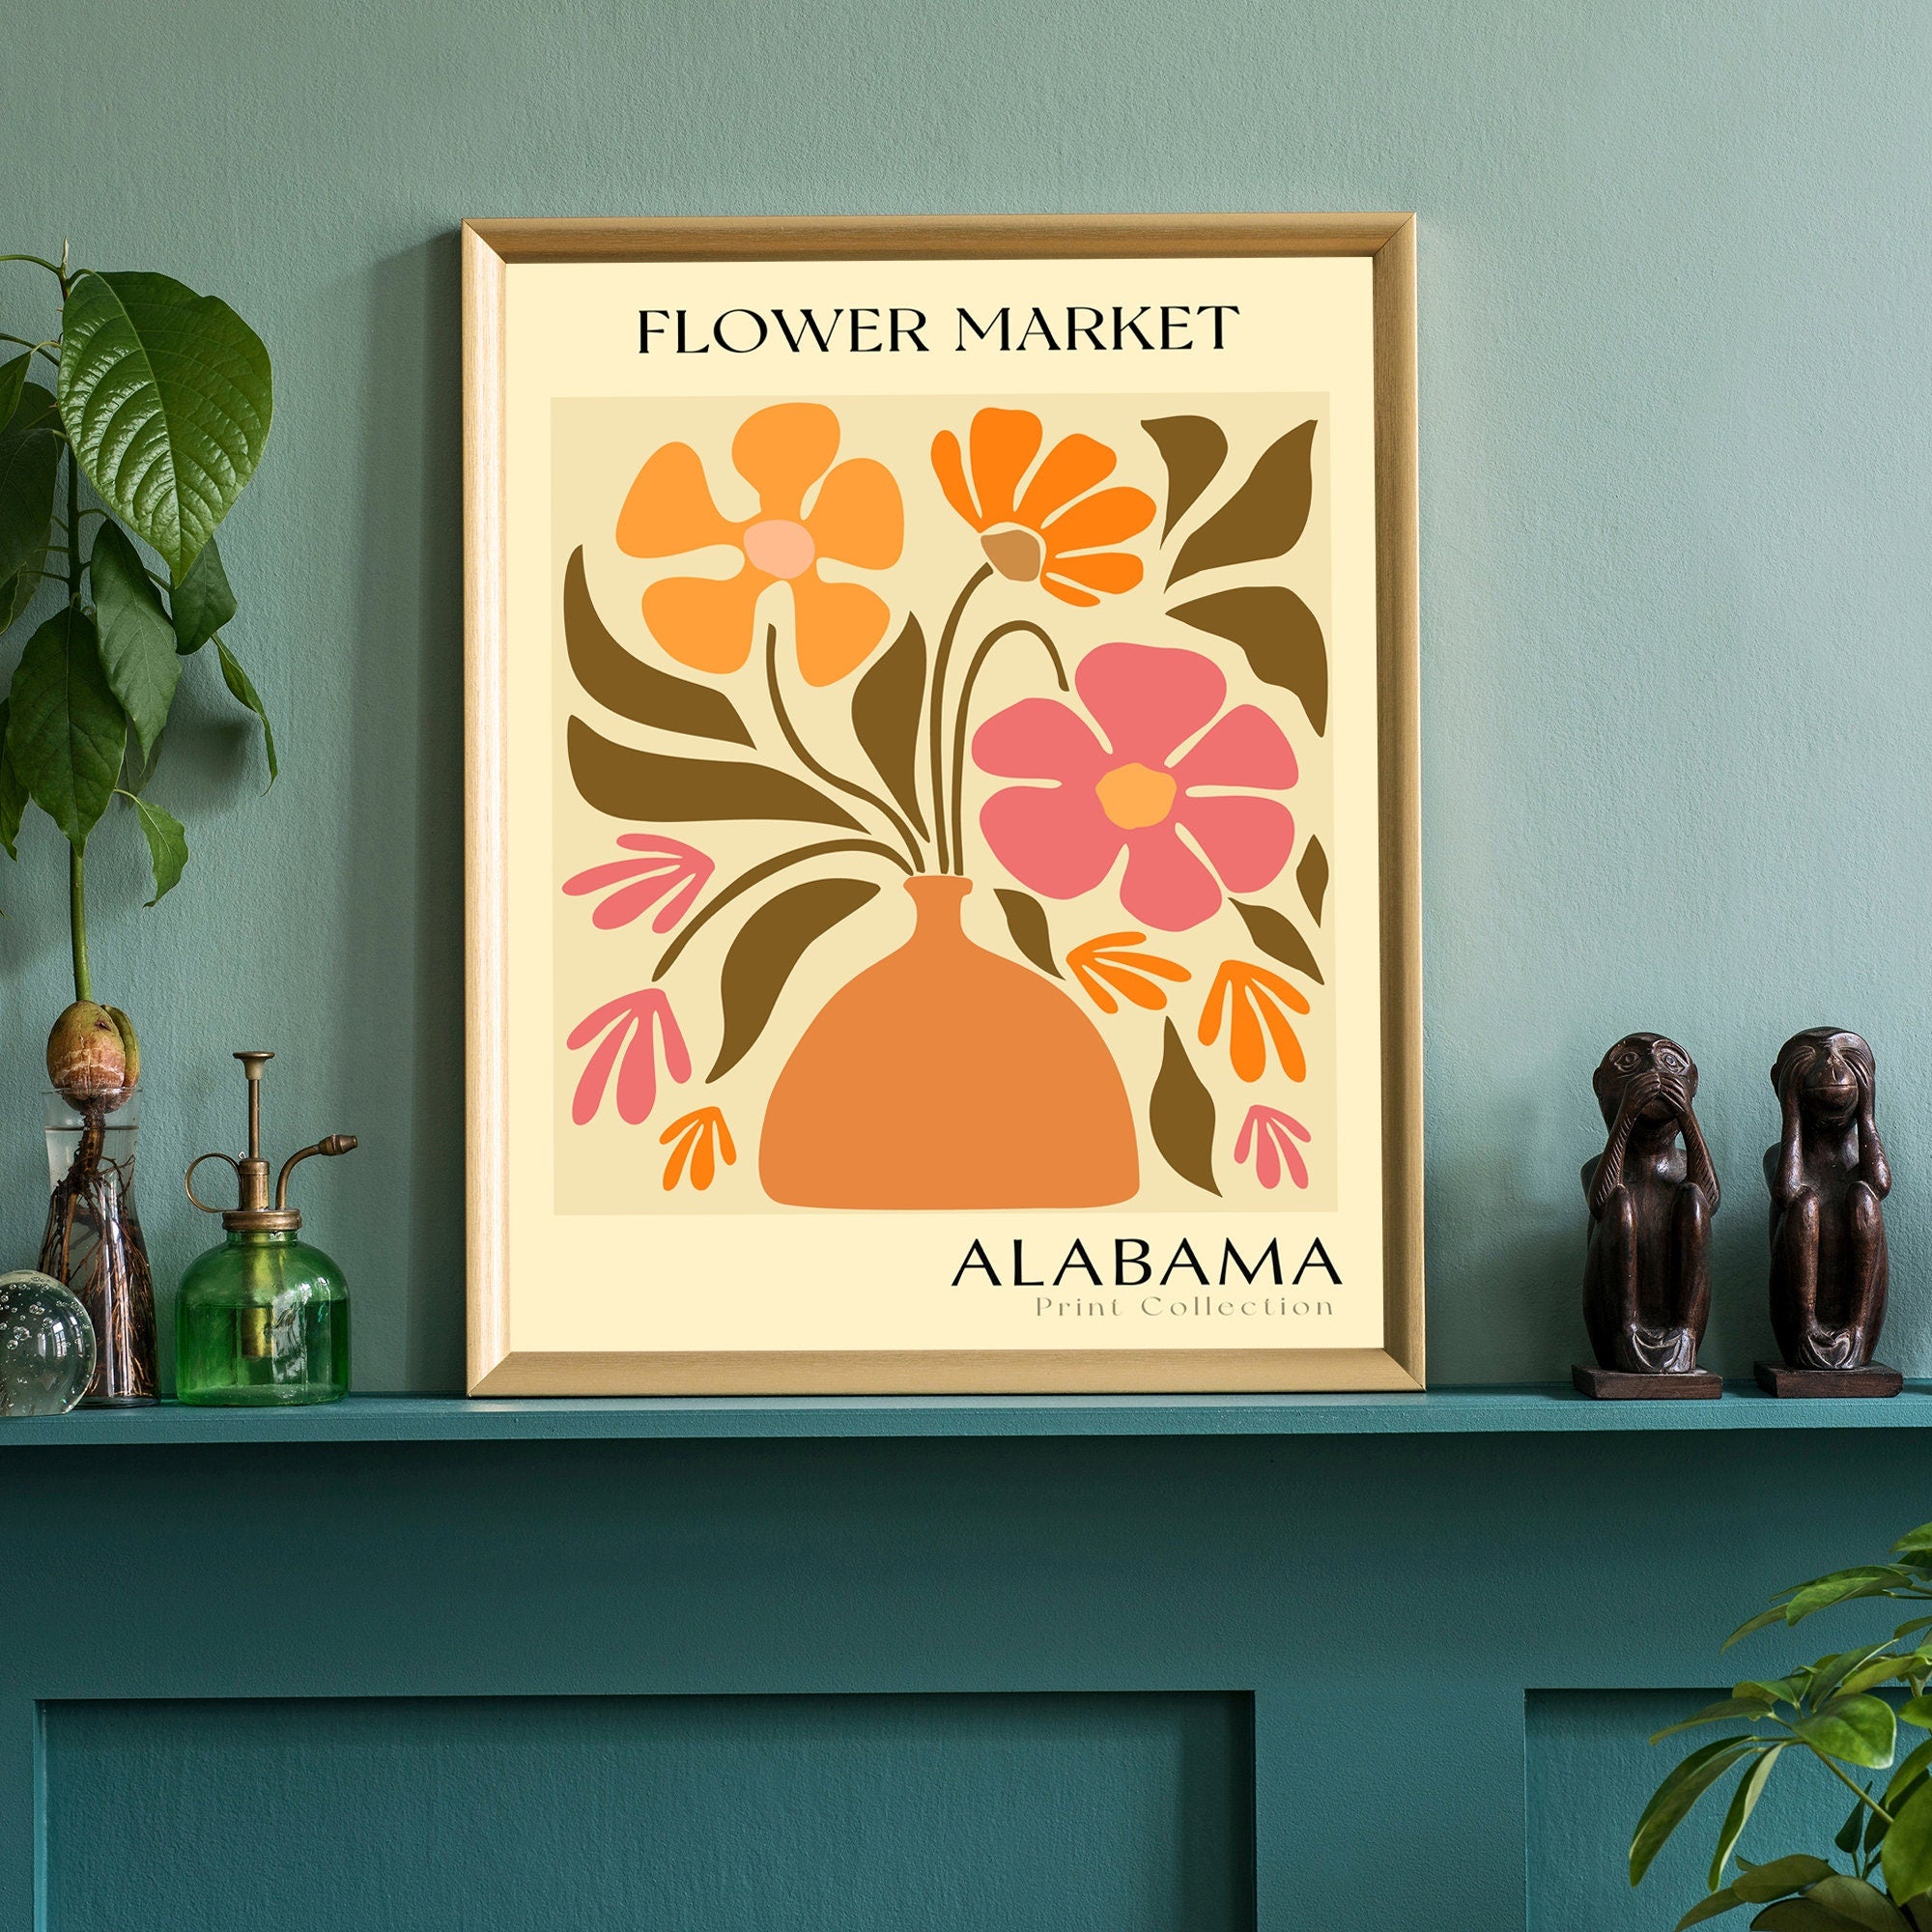 Alabama State flower print, USA states poster, Alabama flower market poster, Botanical posters, Natural poster artwork, Boho floral wall art